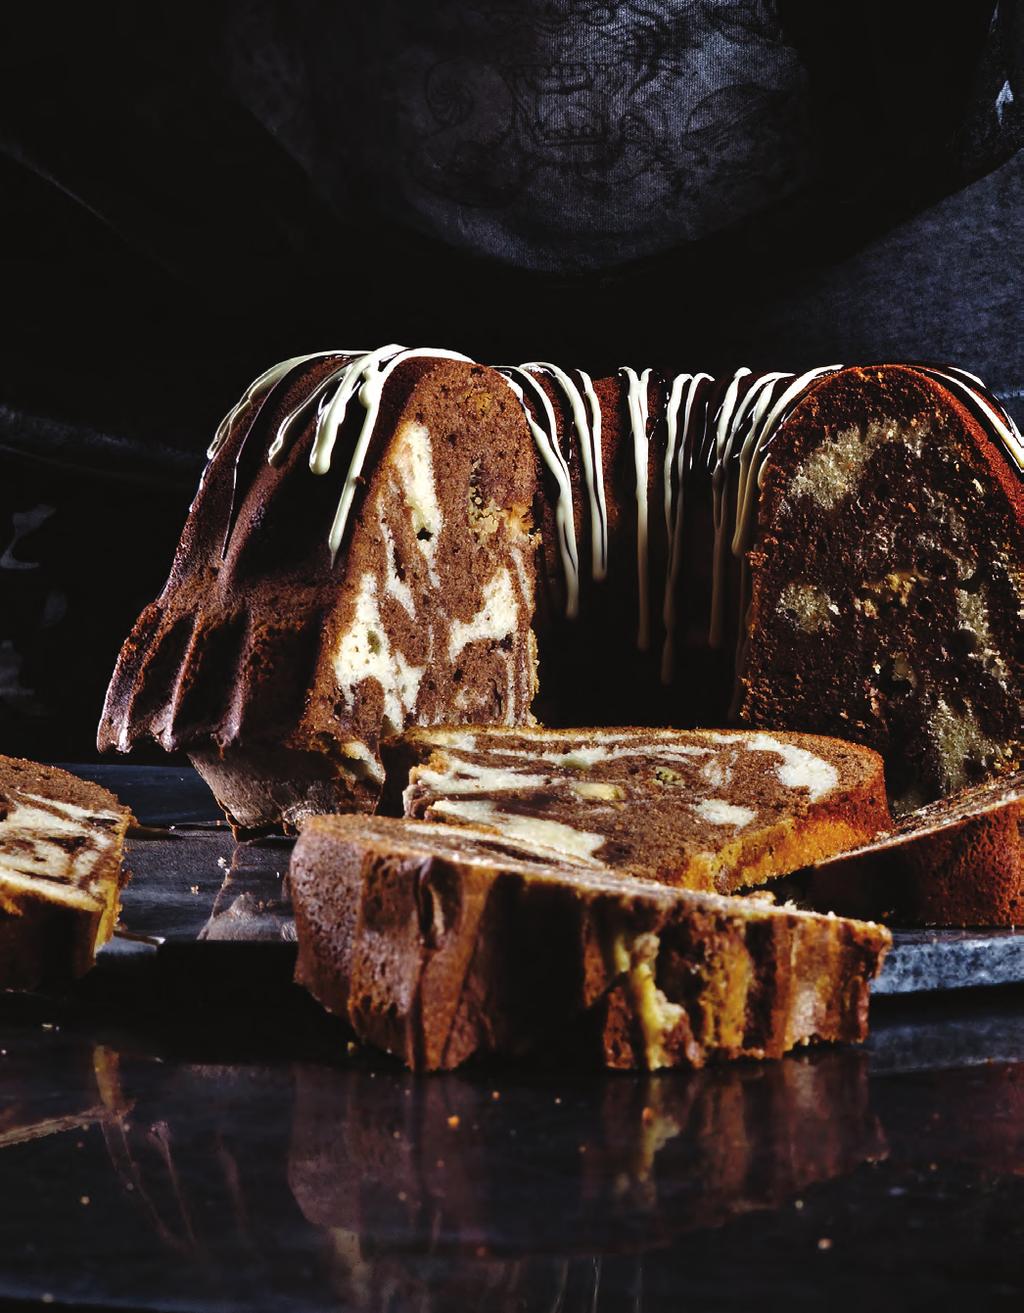 Pound cake σοκολάτα με frosting φιστικοβούτυρου Κέικ βανίλια-σοκολάτα (Μαρμπρέ) Cupcakes με